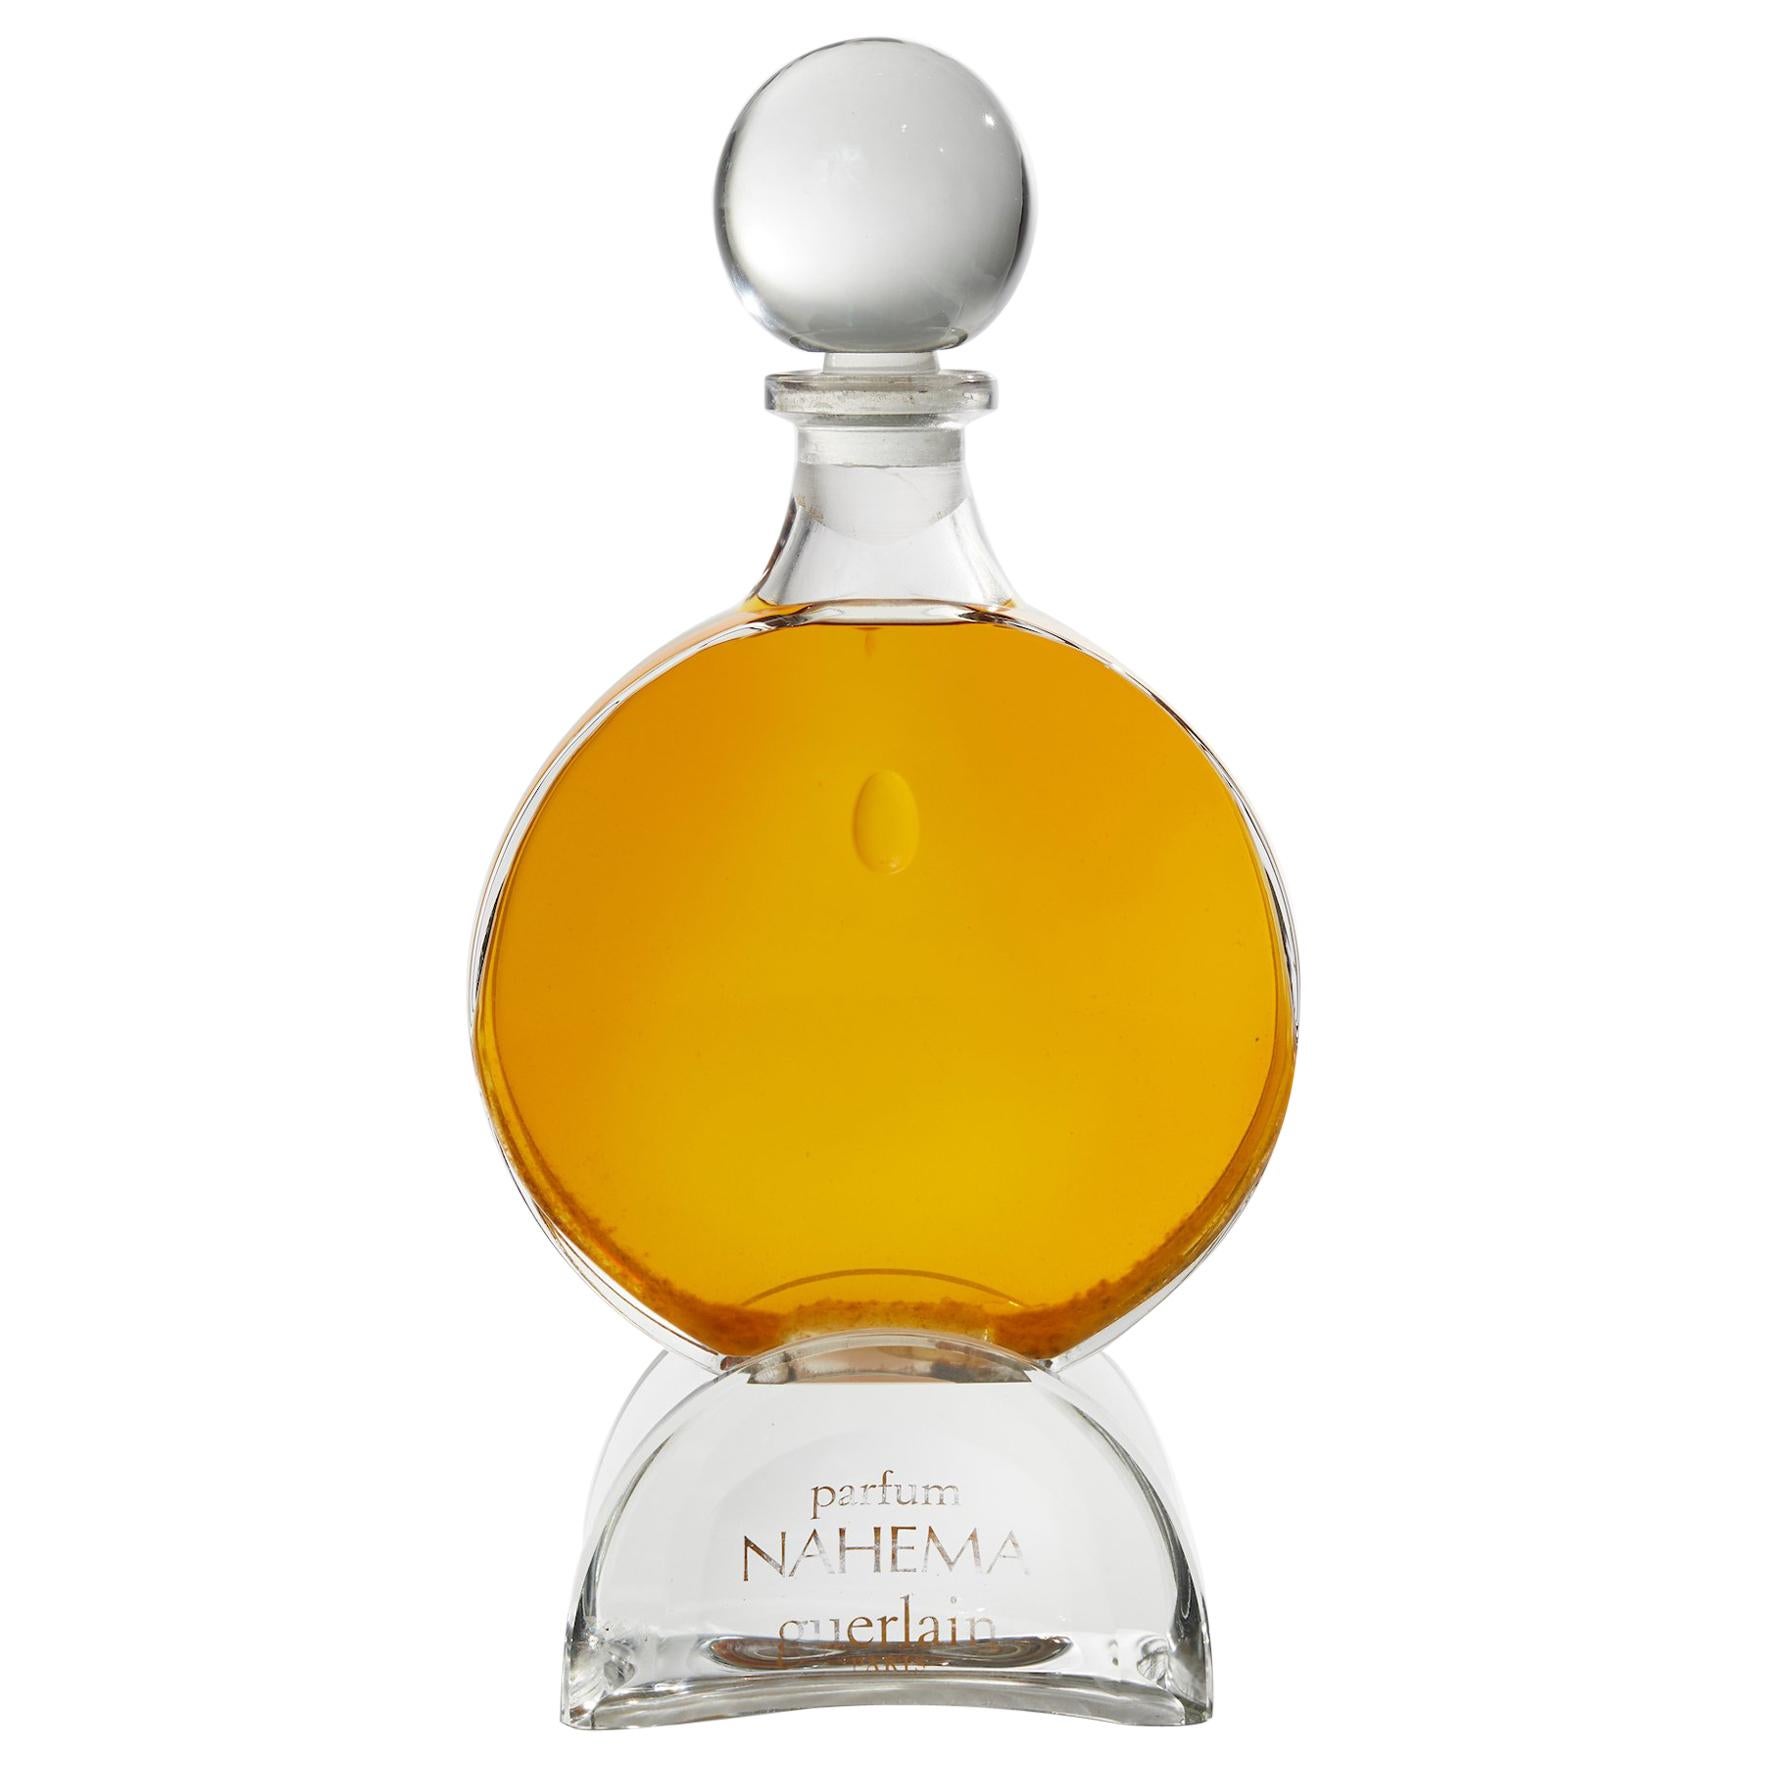 Glass Perfume Bottle "Nahema" by Guerlain For Sale